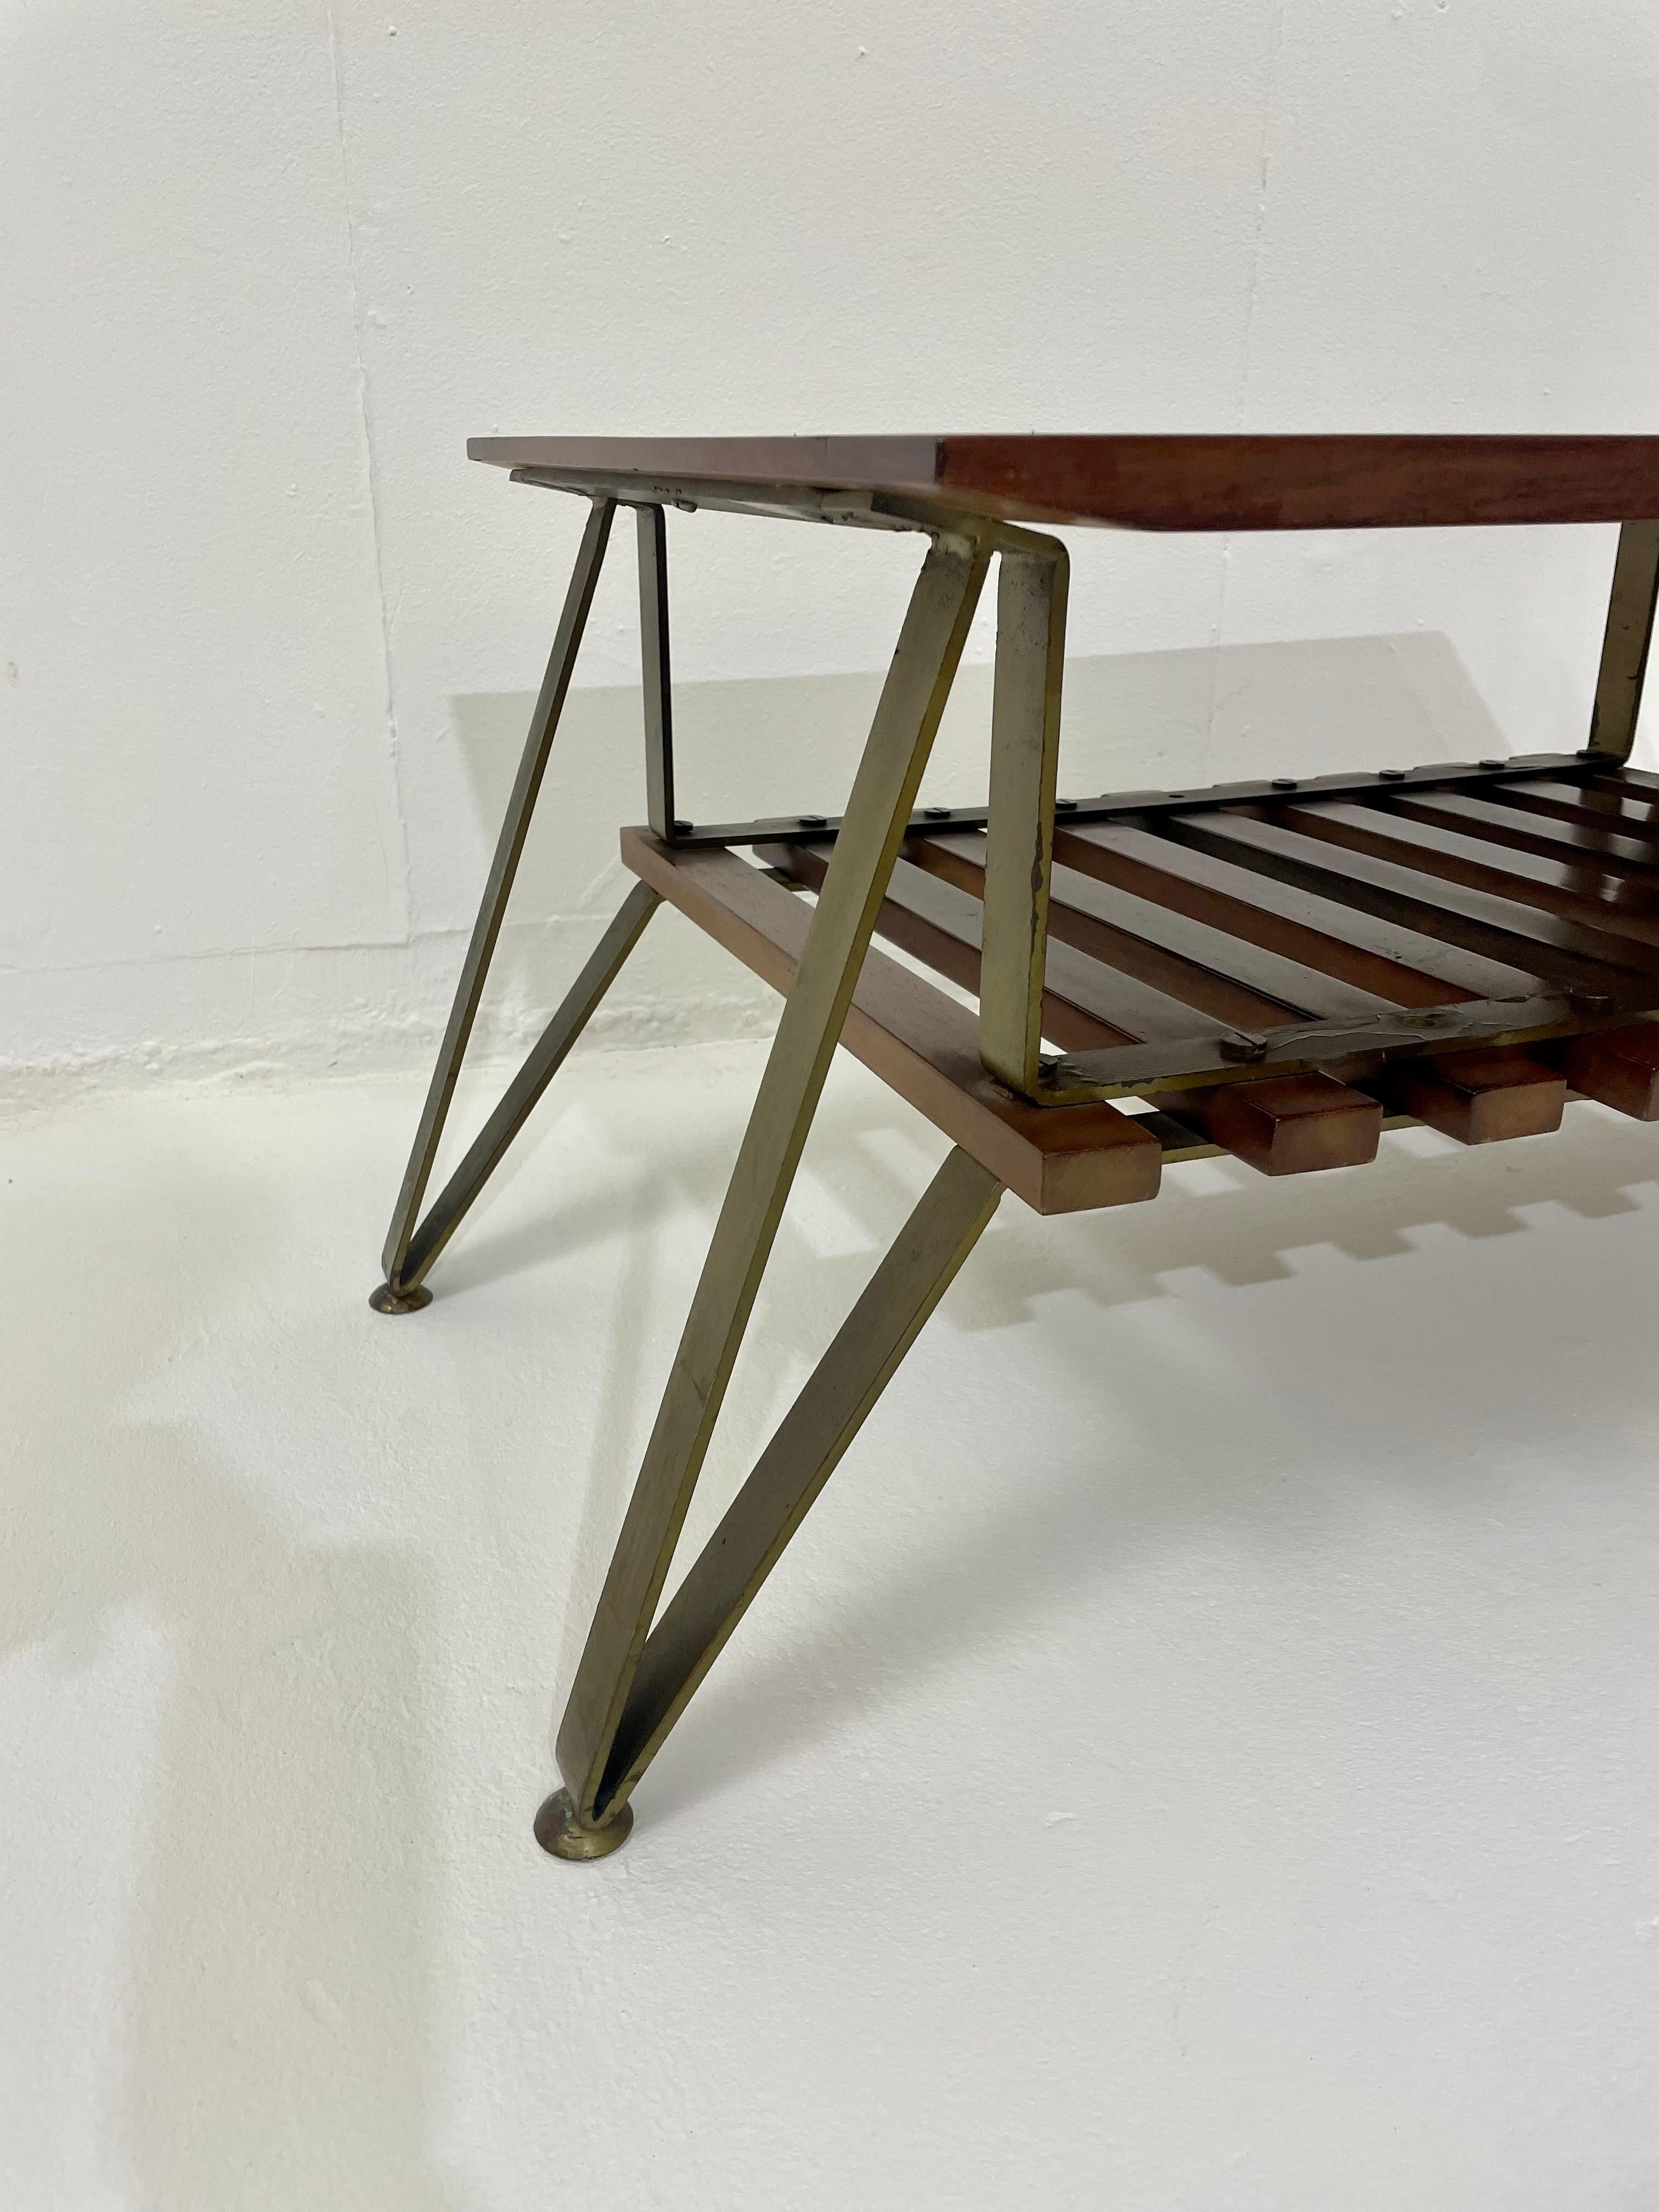 Mid-Century Modern Italian coffee table with magazine rack, wood and metal, 1960s.